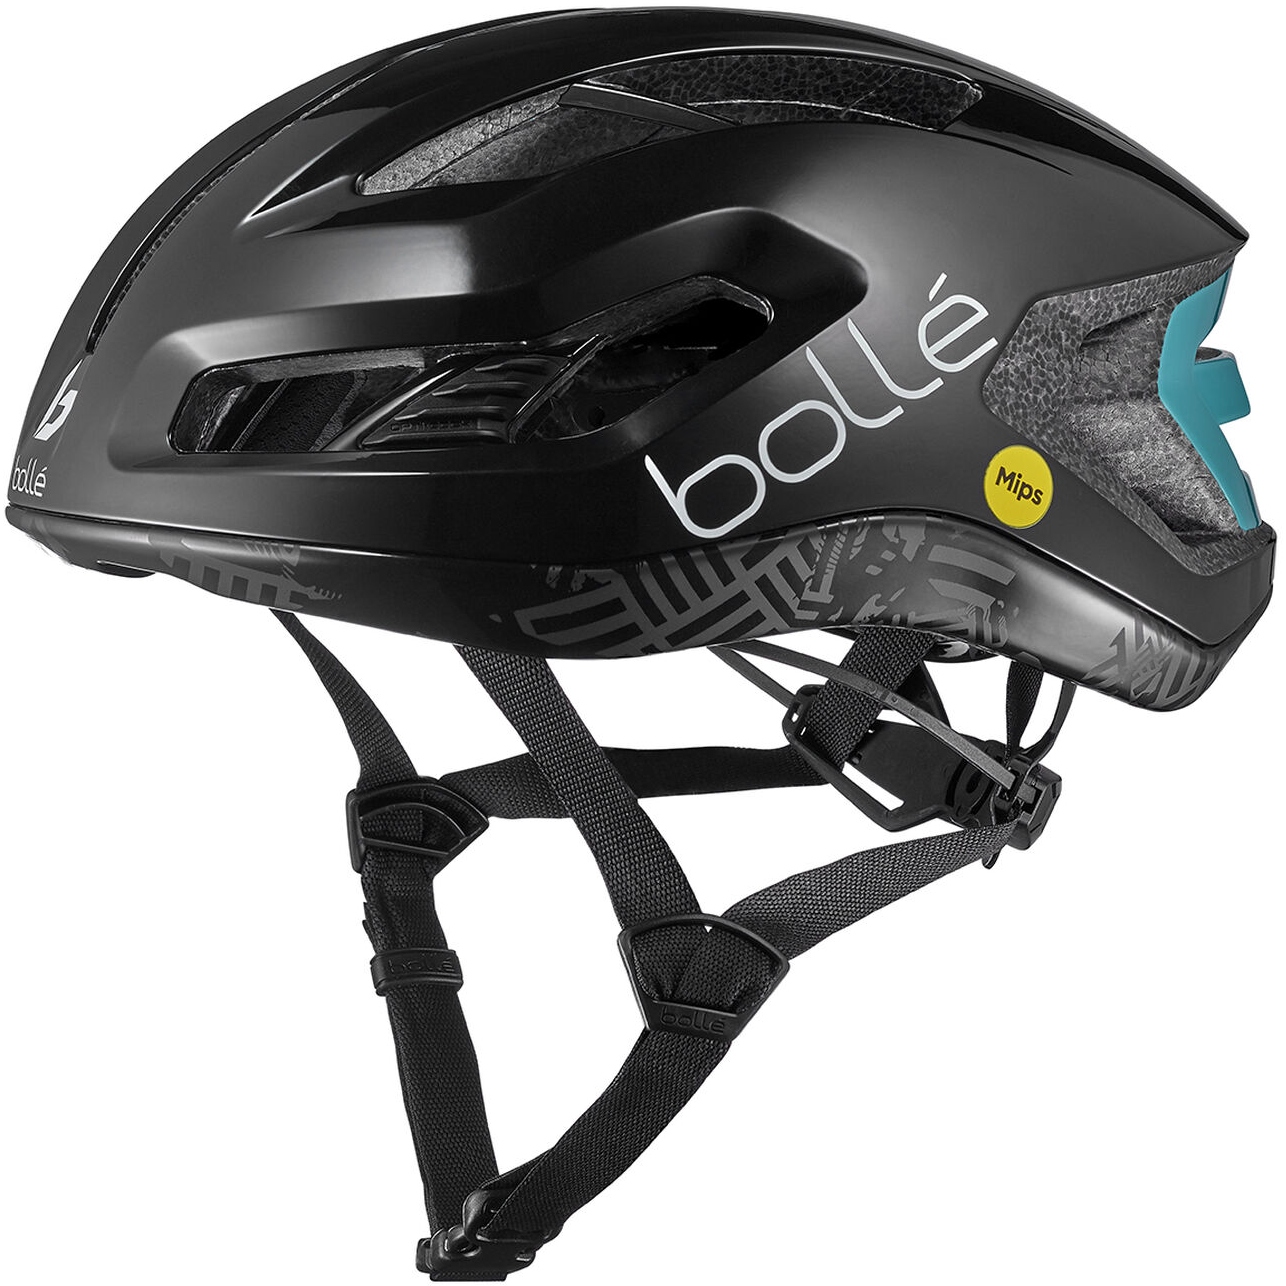 Picture of Bollé Avio MIPS Helmet - Black Glaz Shiny